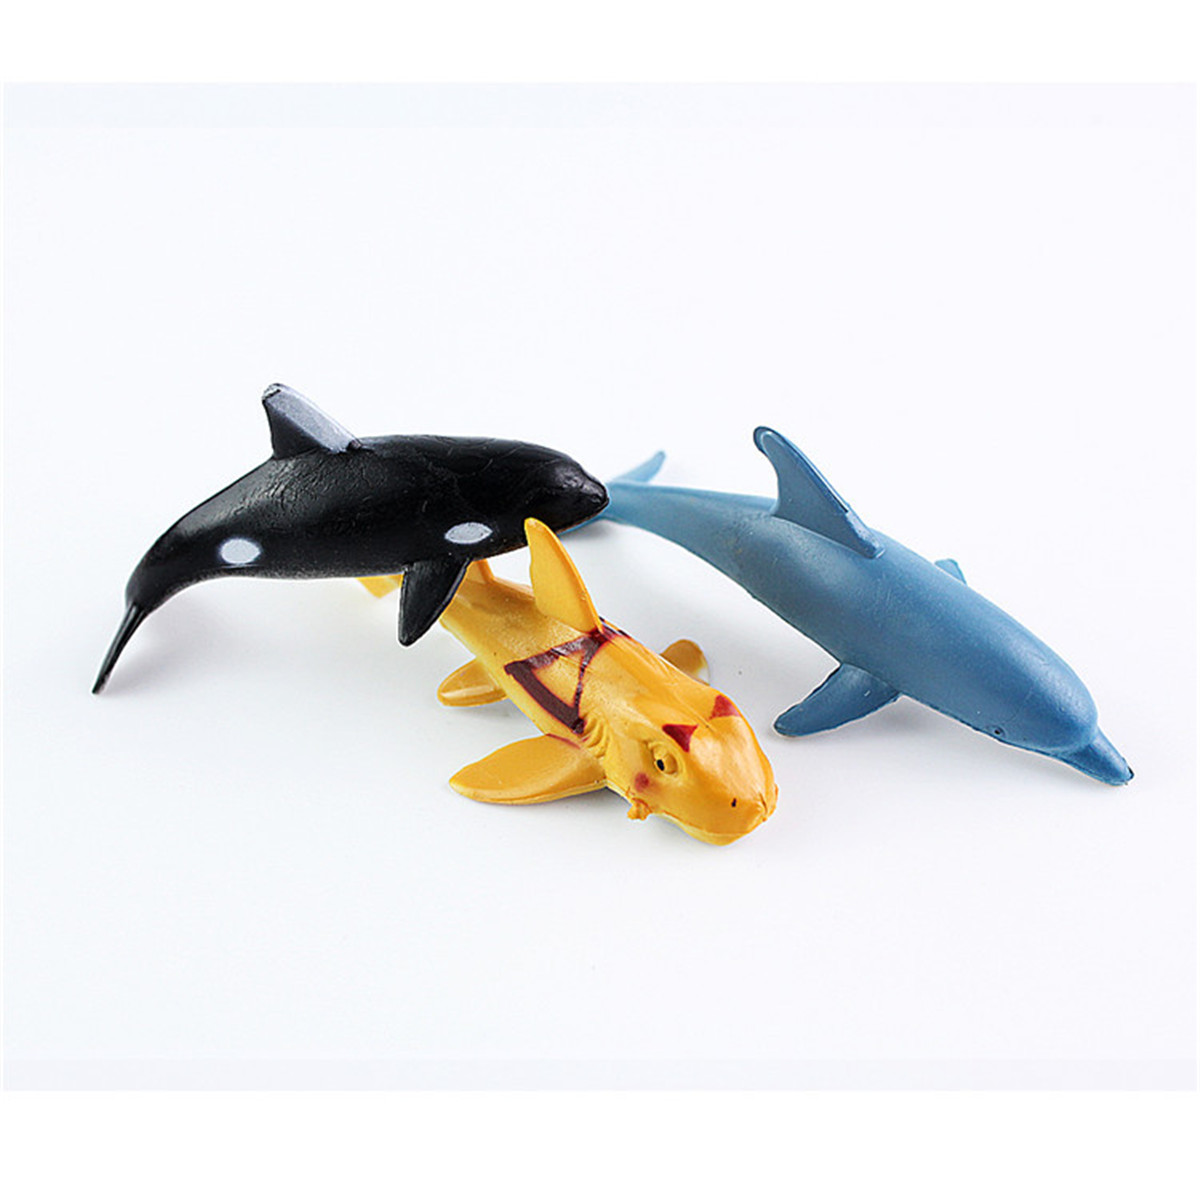 24PCS-Plastic-Ocean-Animals-Figure-Sea-Dolphin-Turtle-Creatures-Model-Toys-Gift-1472912